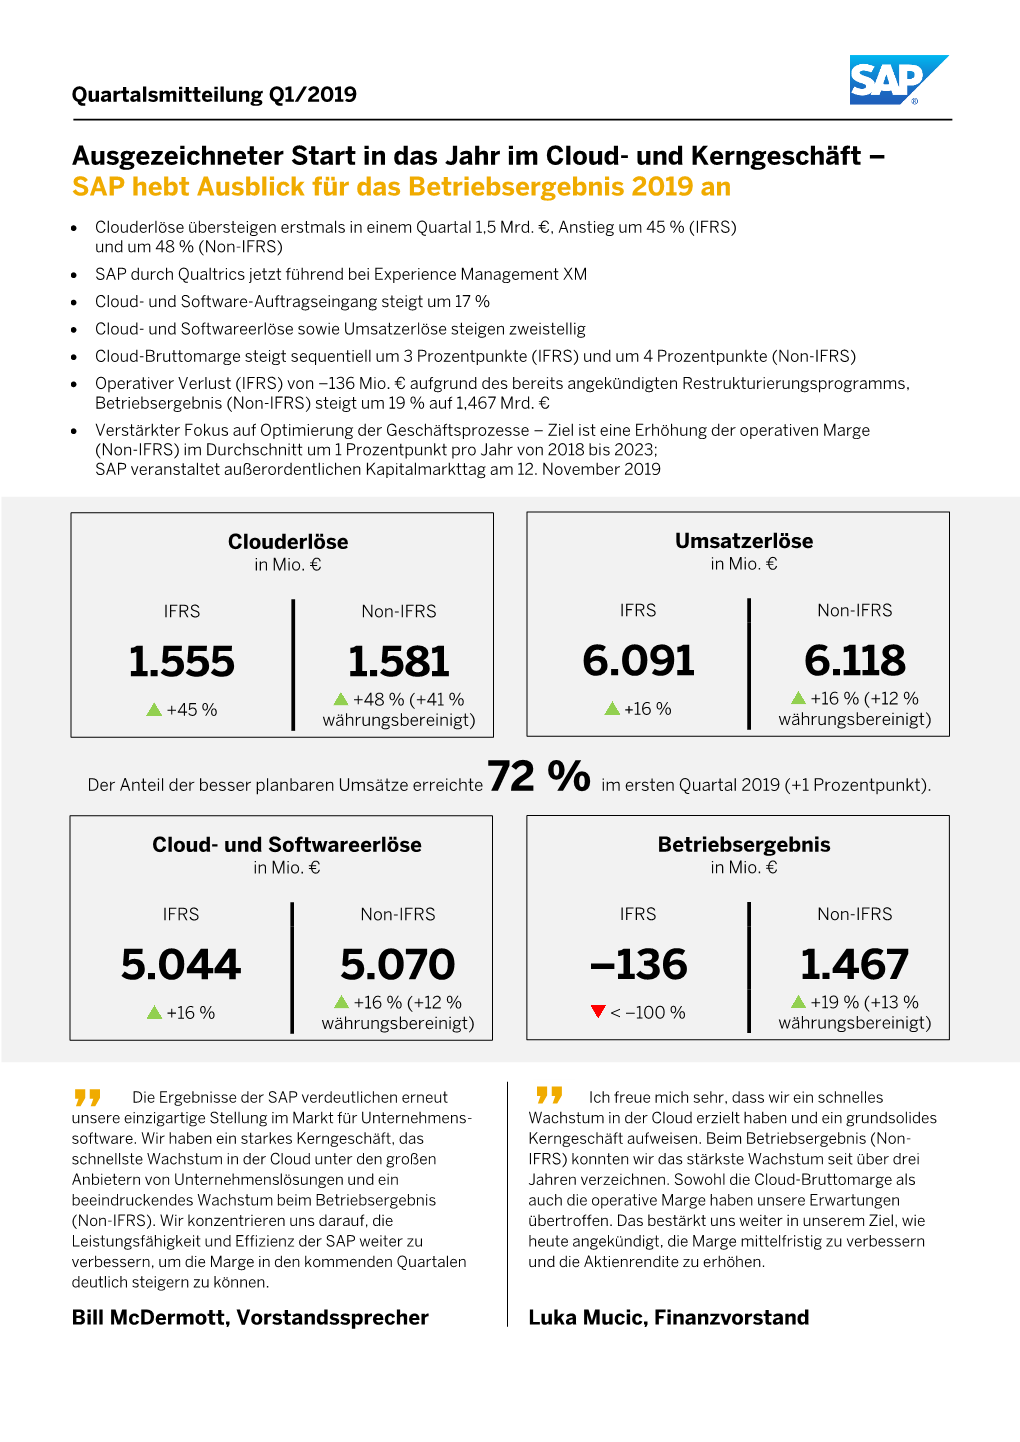 SAP-Quartalsmitteilung Q1 2019